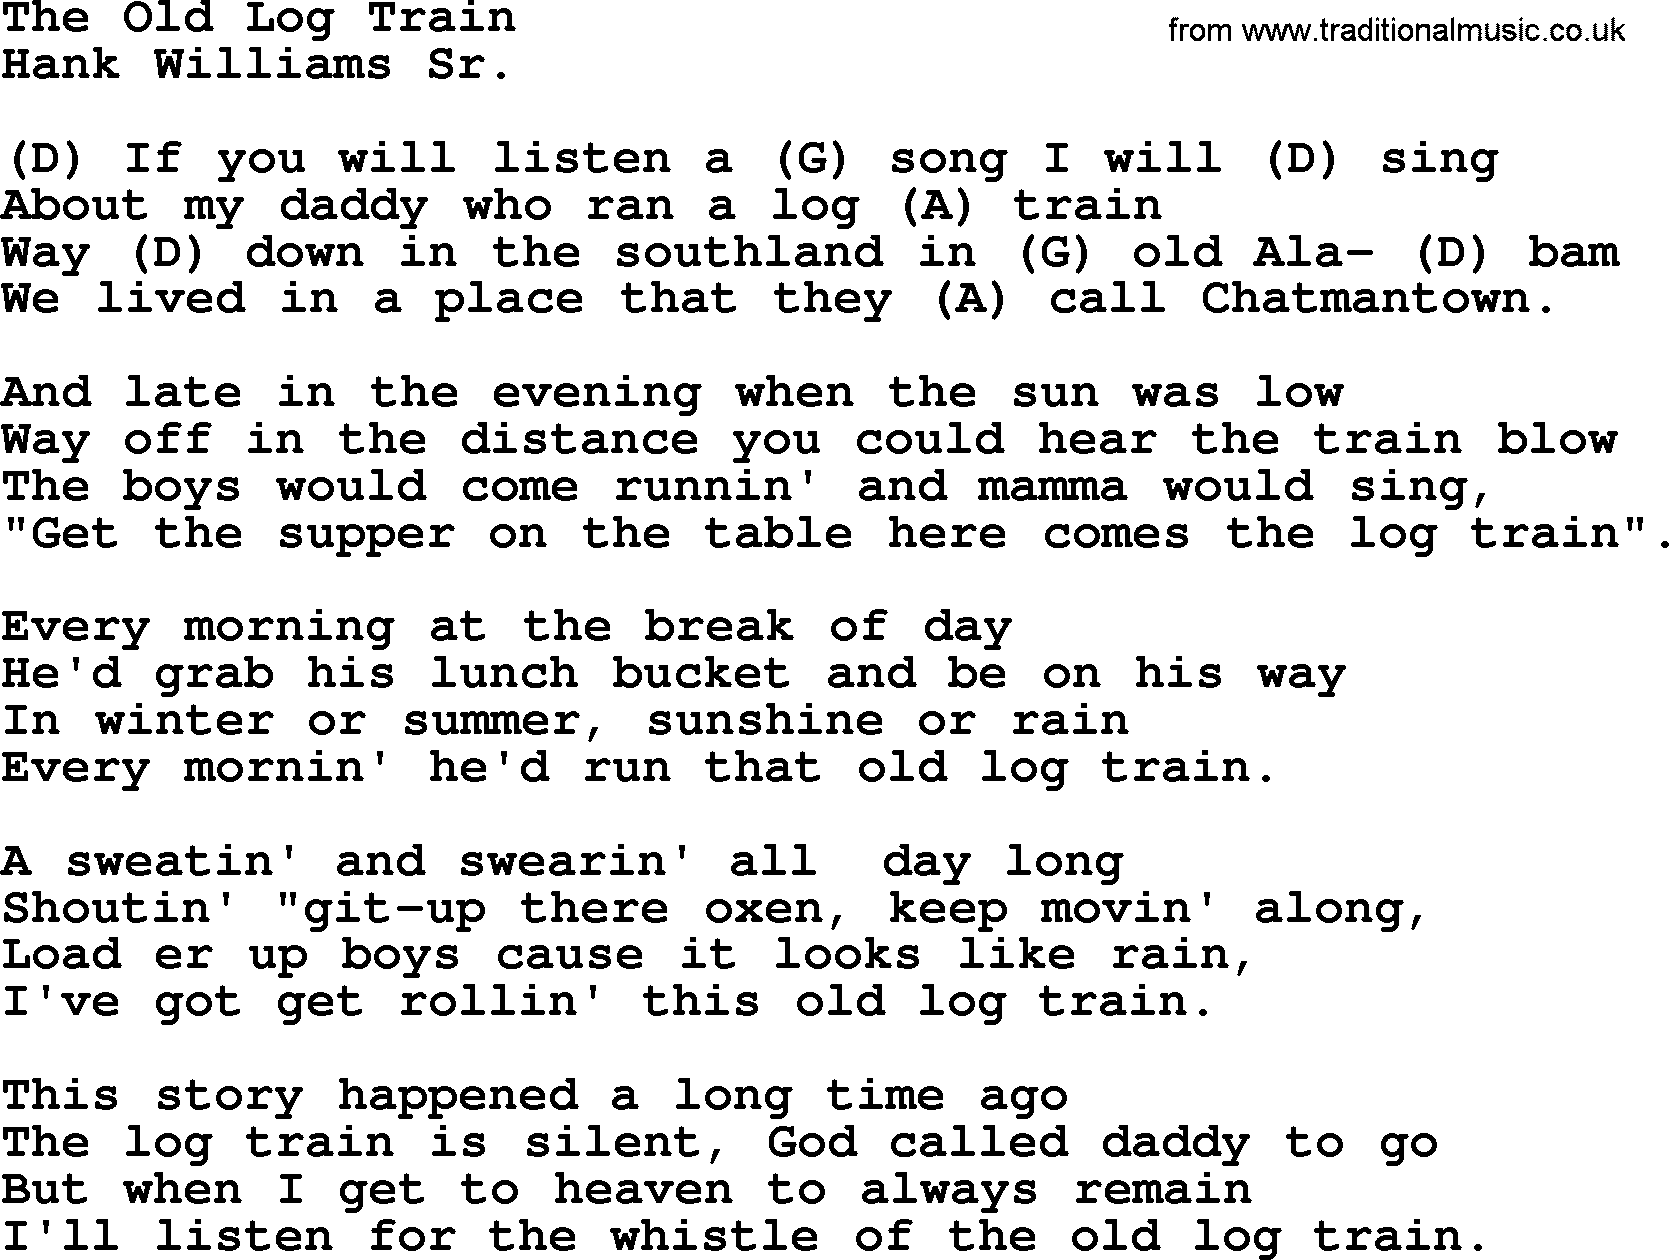 Hank Williams song The Old Log Train, lyrics and chords